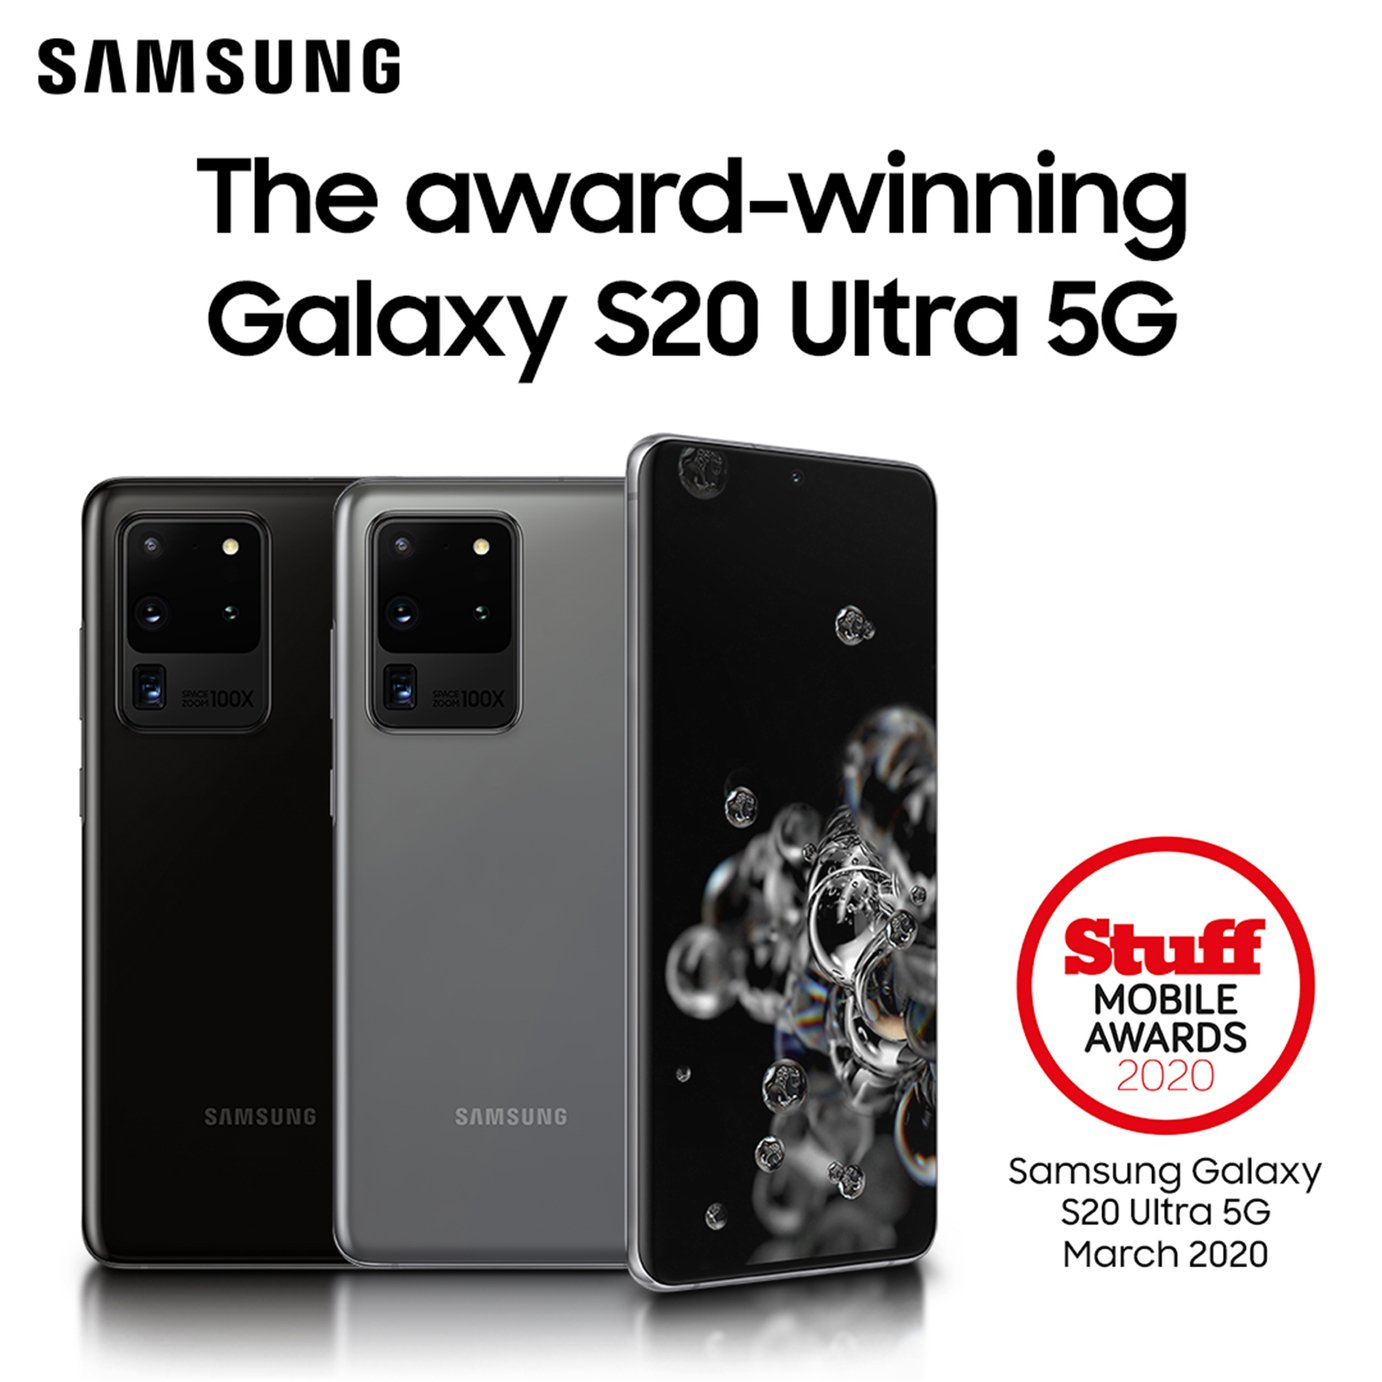 SIM Free Samsung Galaxy S20 Ultra 5G 128GB Mobile -Black Review